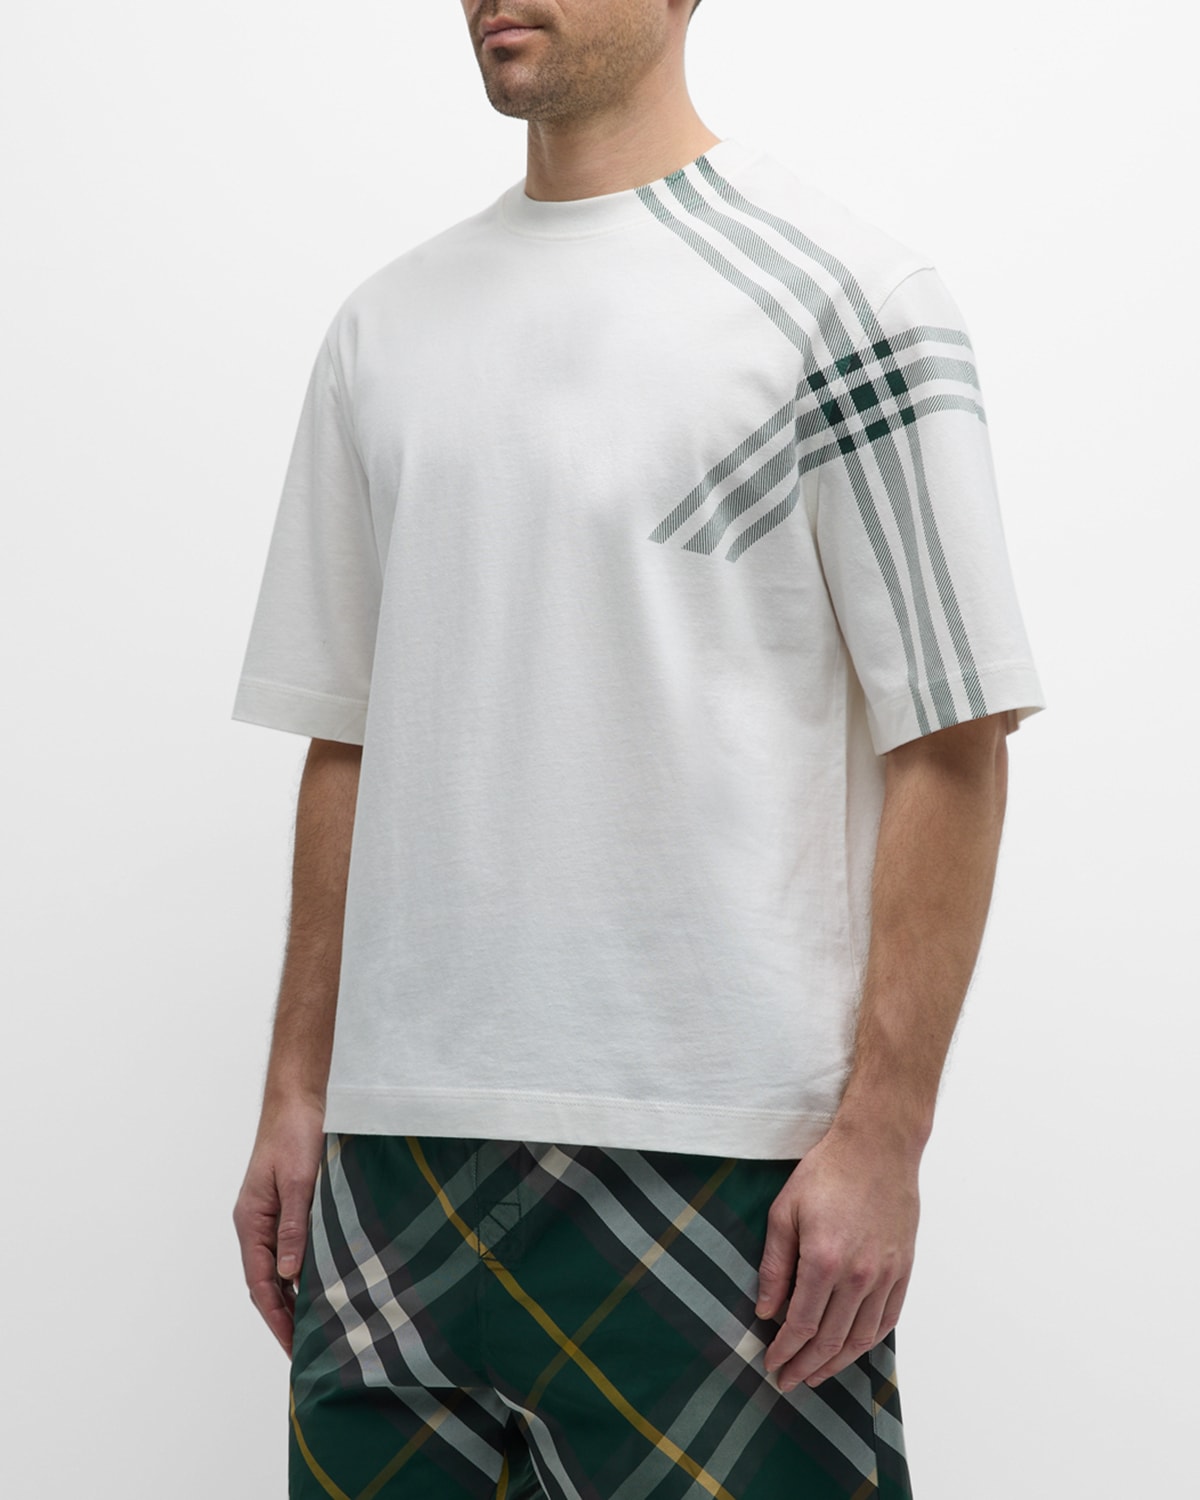 Burberry Men's T-shirt With Shoulder Plaid In Rain